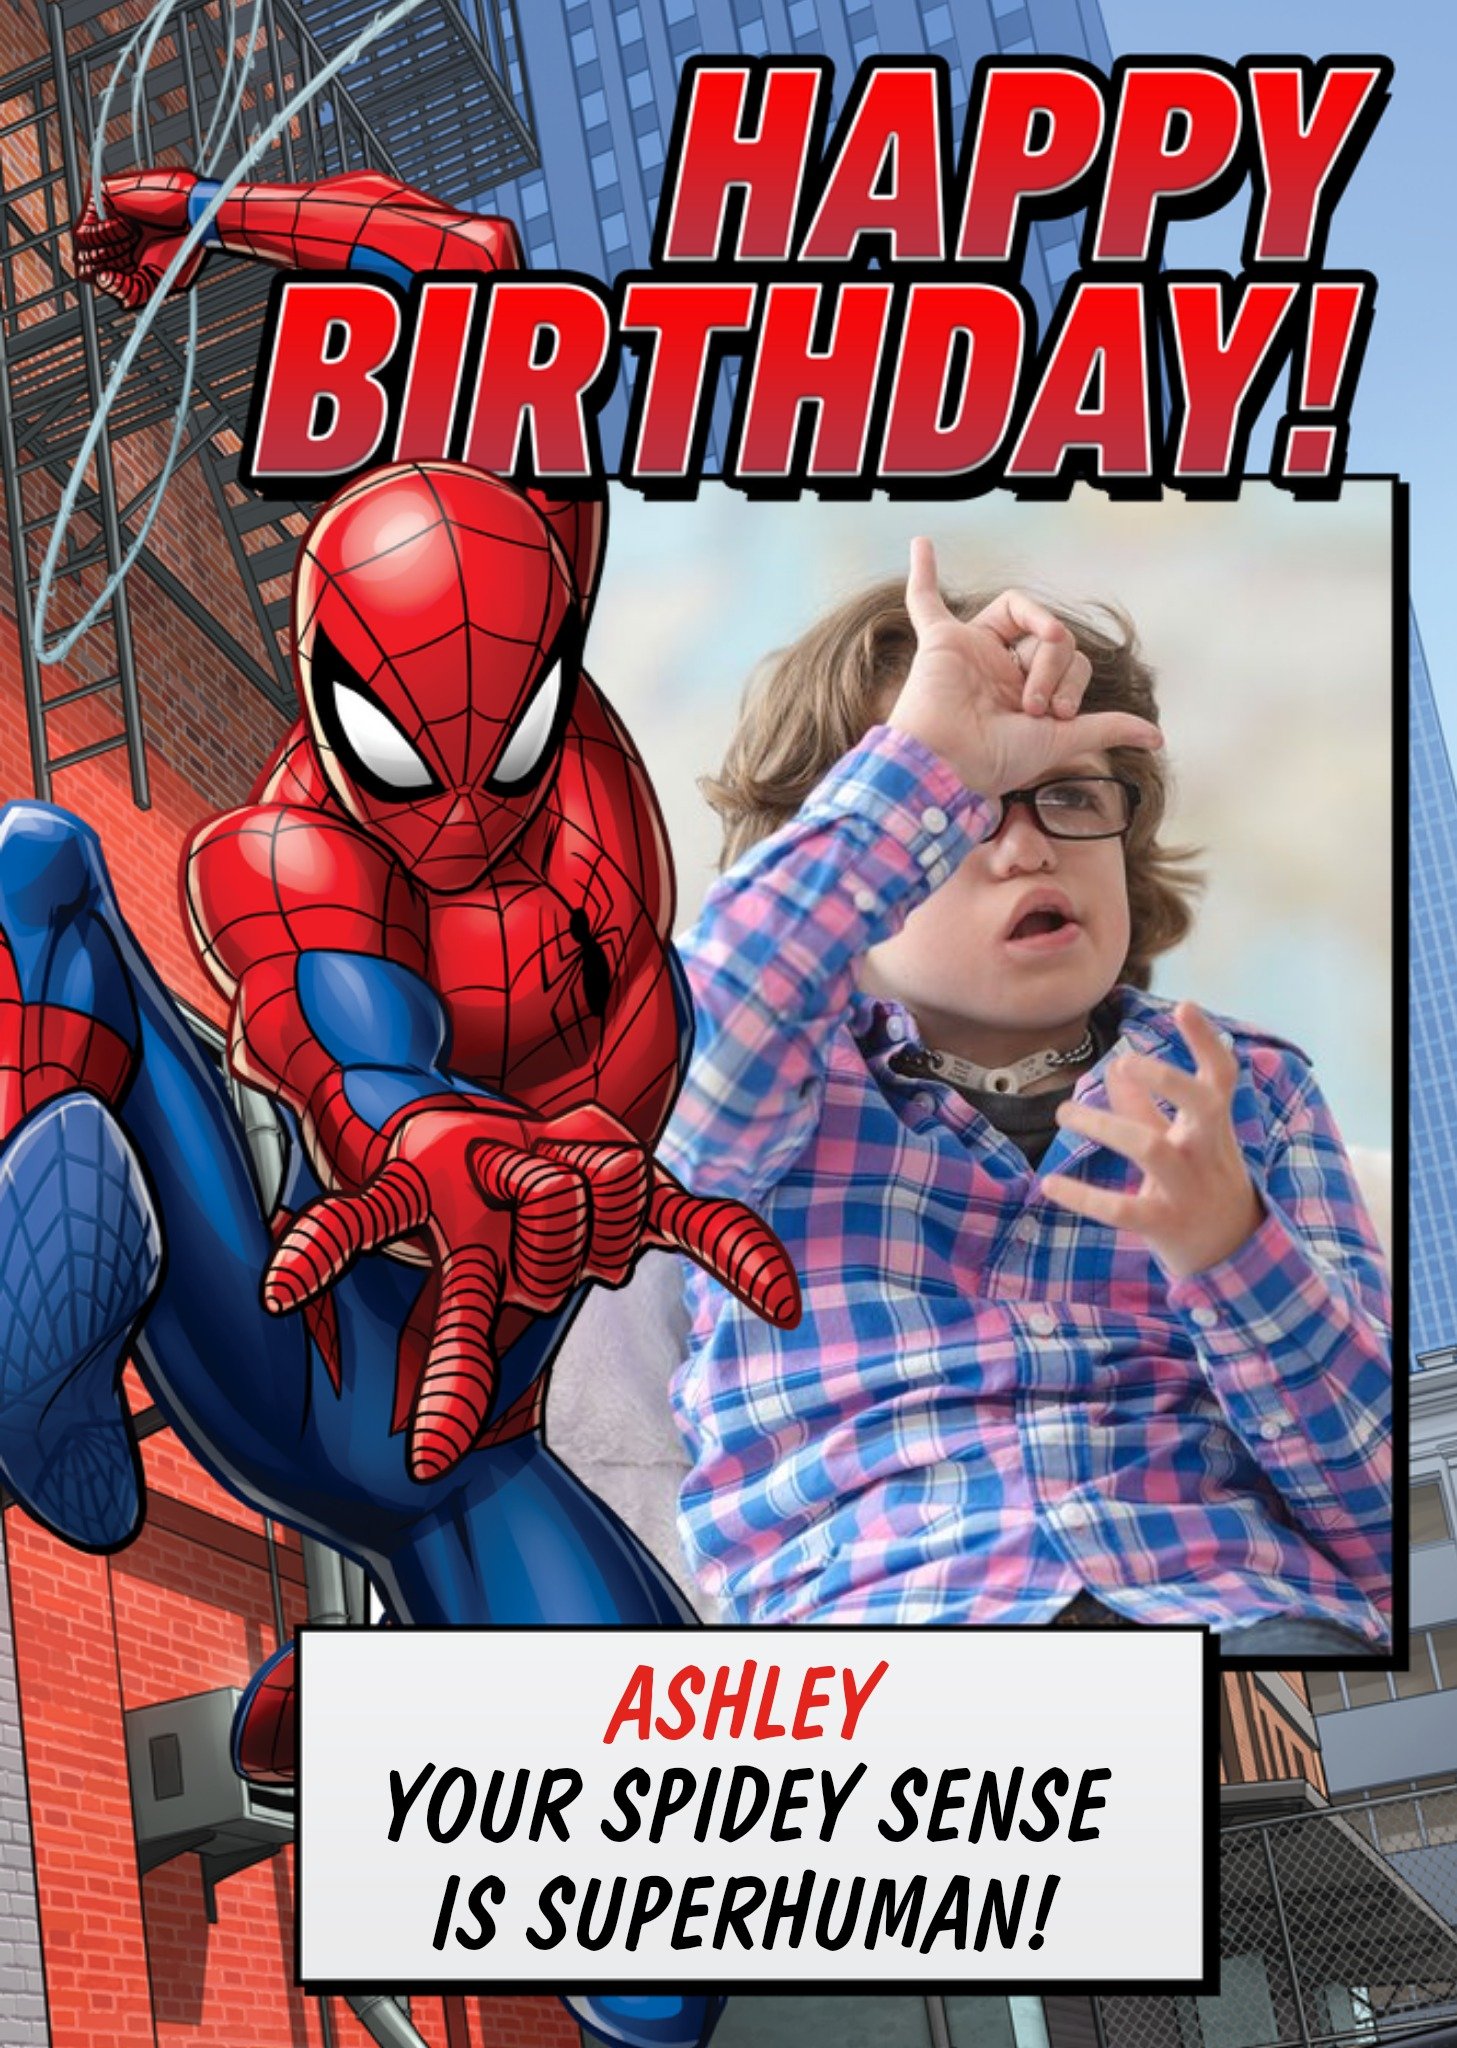 Marvel Avengers Spiderman Spidey Sense Photo Upload Birthday Card Ecard